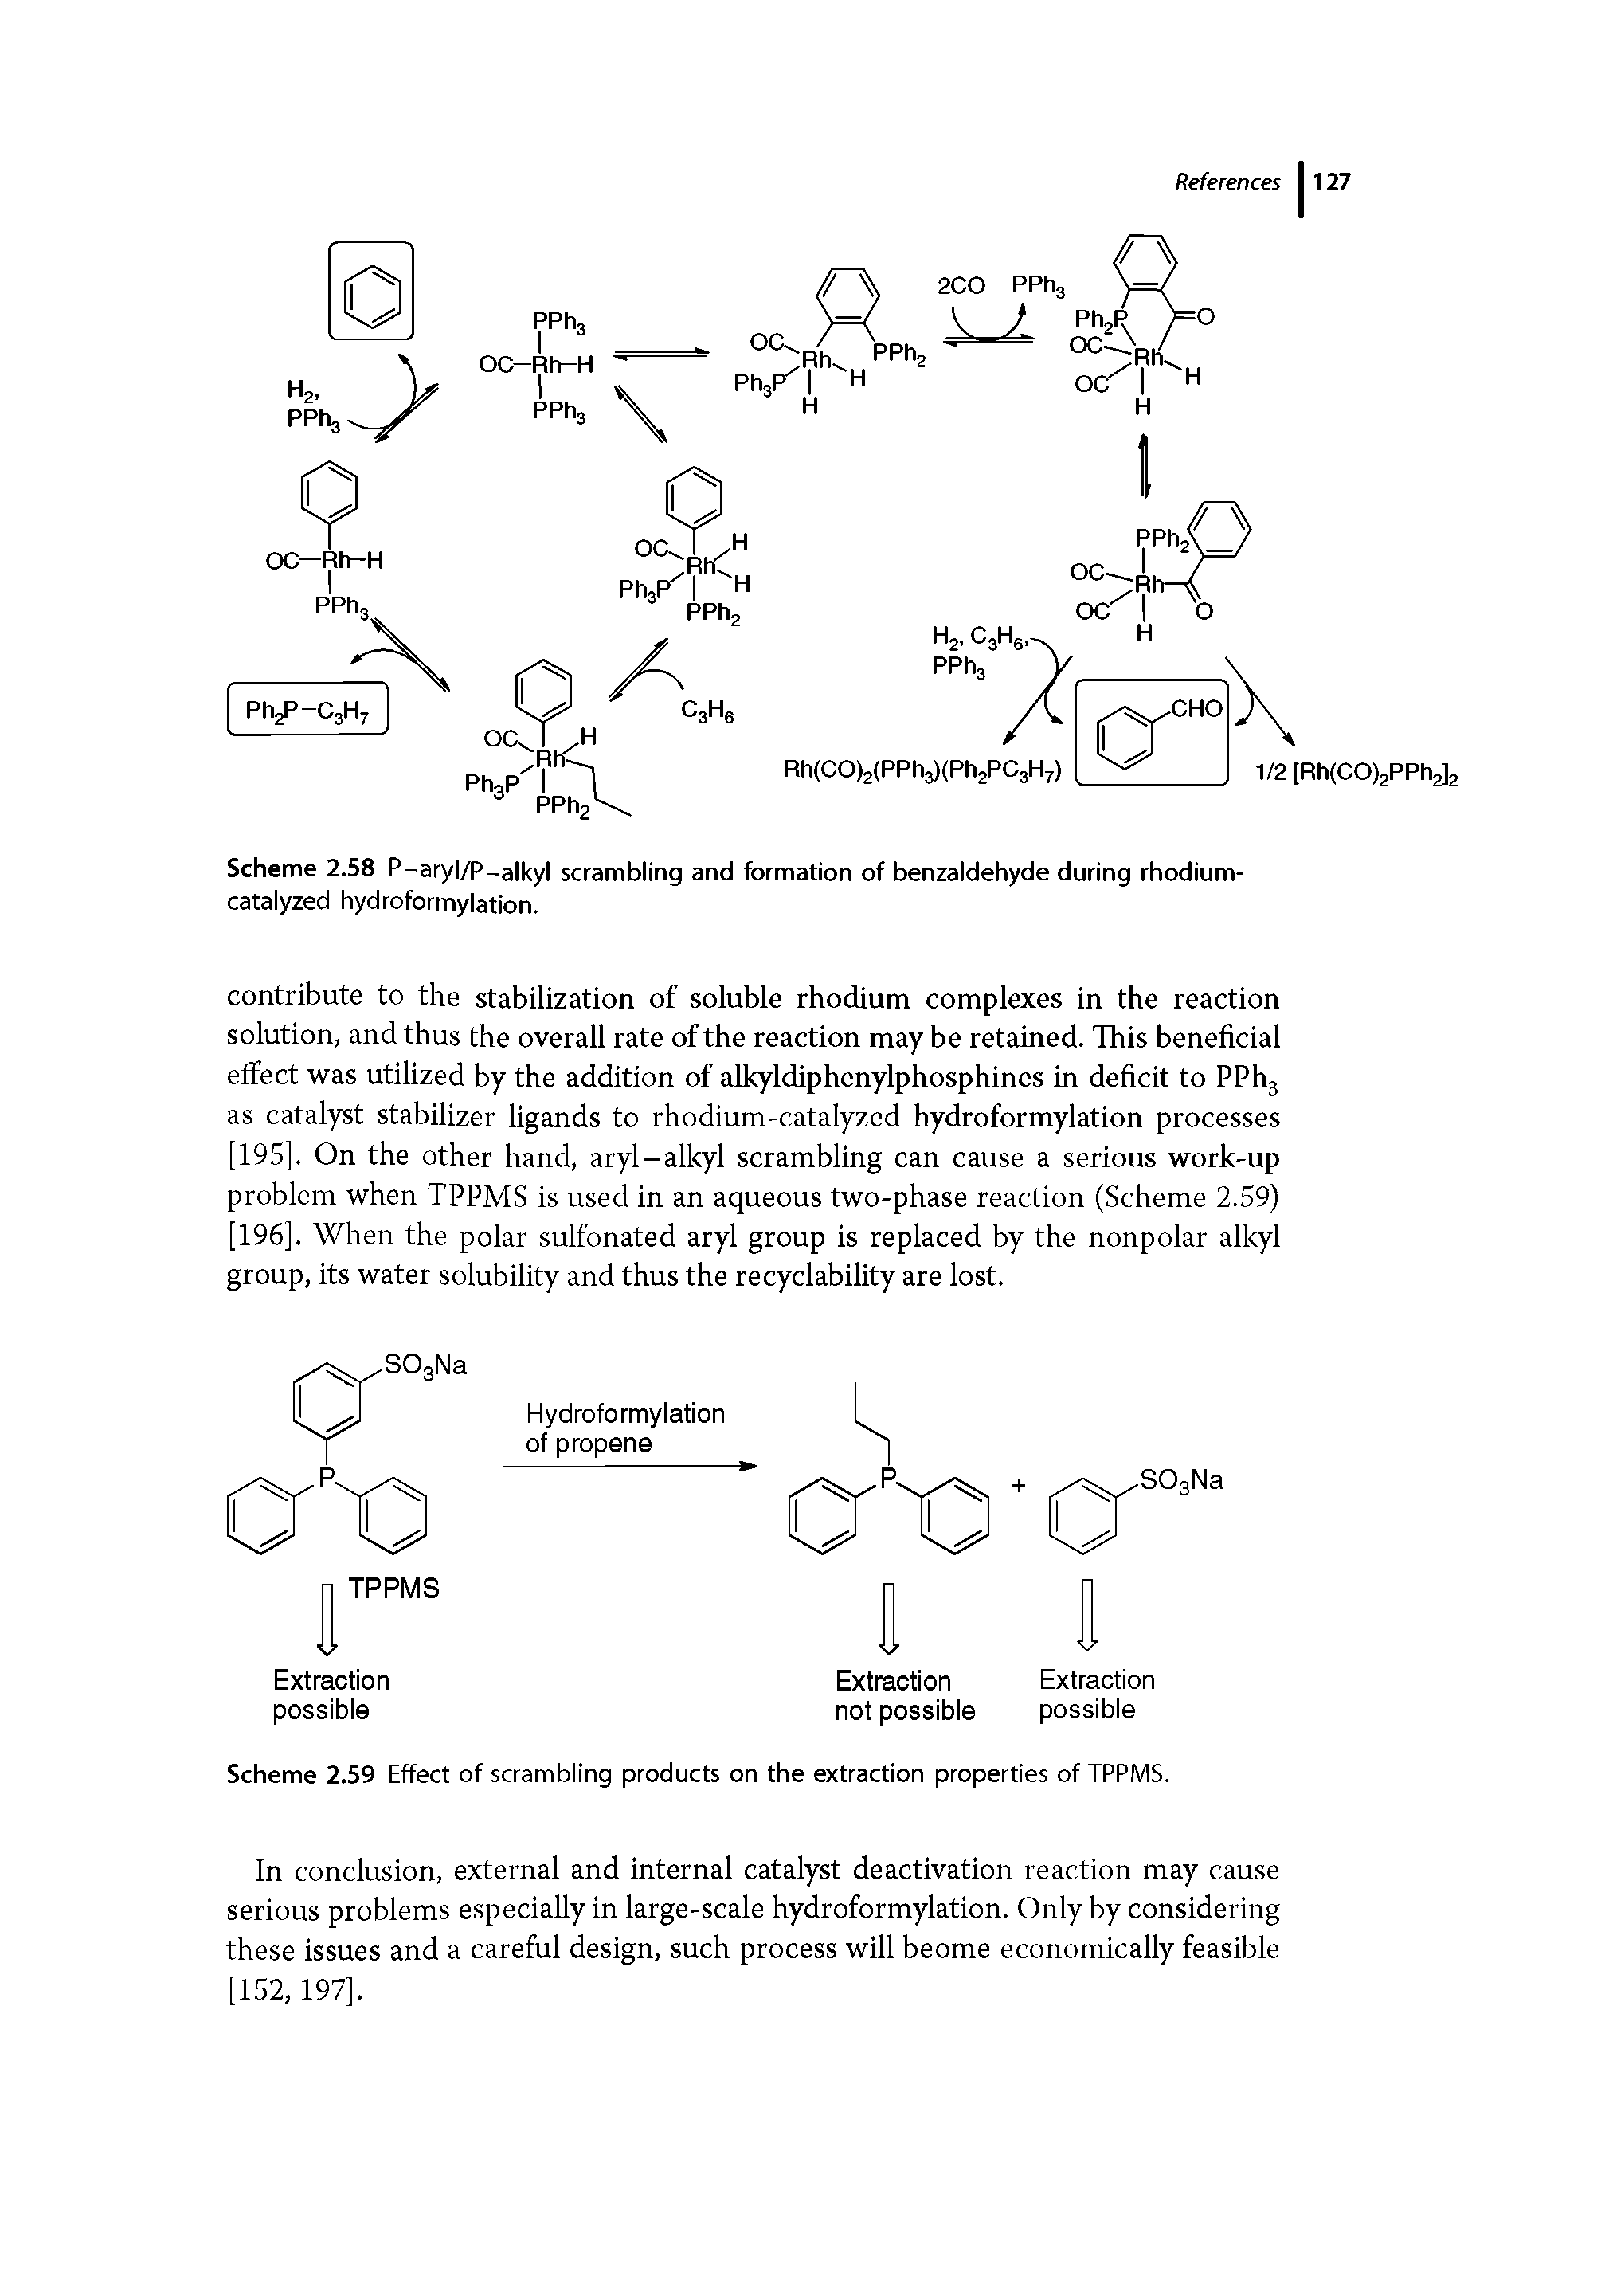 Scheme 2.58 P-aryl/P-alkyl scrambling and formation of benzaldehyde during rhodium-catalyzed hydroformylation.